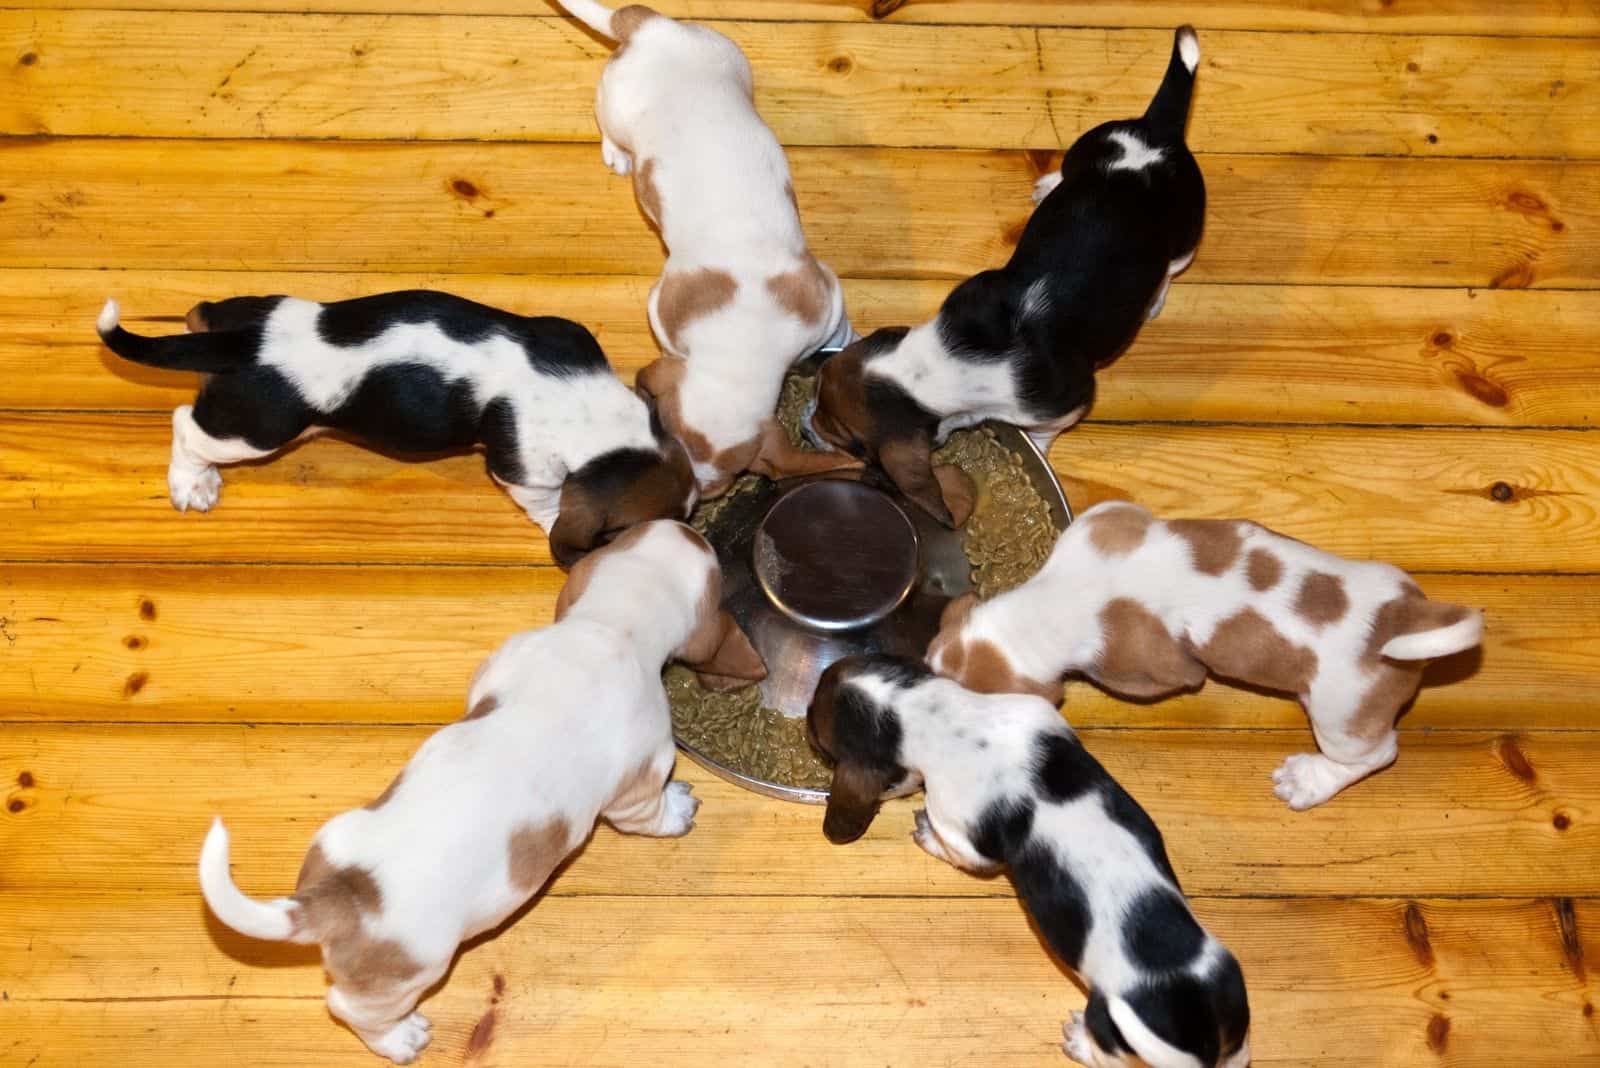 basset hound puppies eating around in a bowl